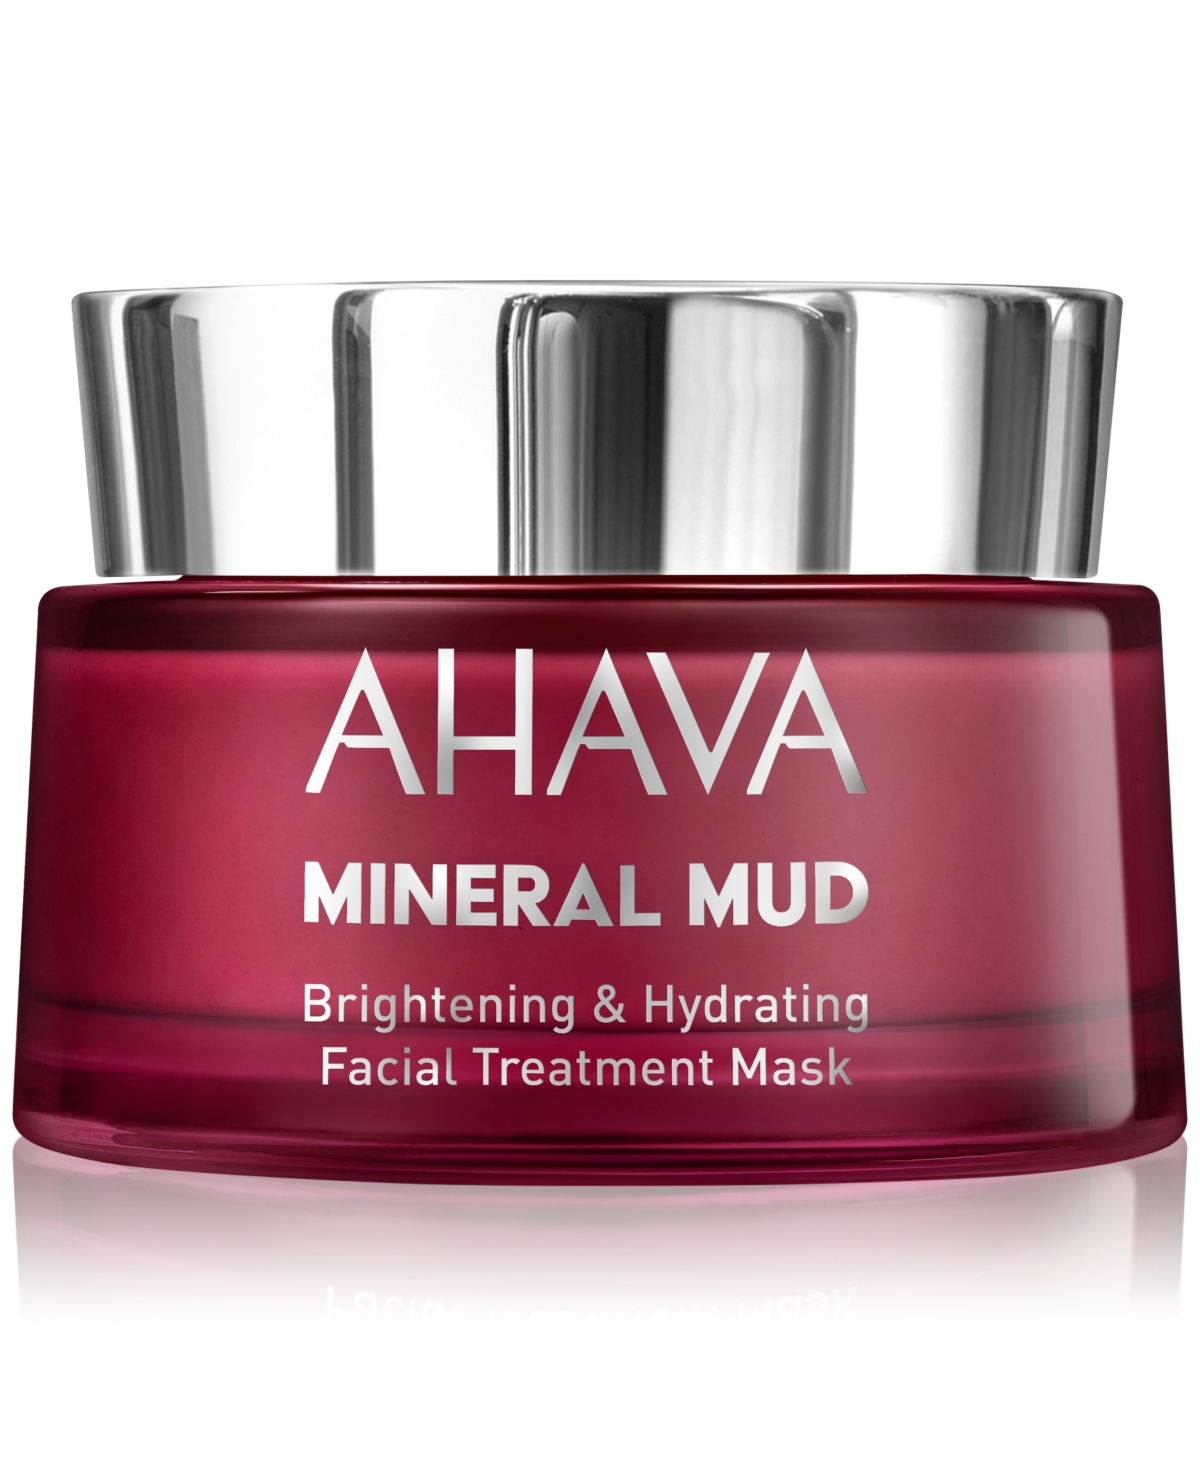 Mineral Mud Brightening & Hydrating Facial Treatment Mask, 1.7 oz.